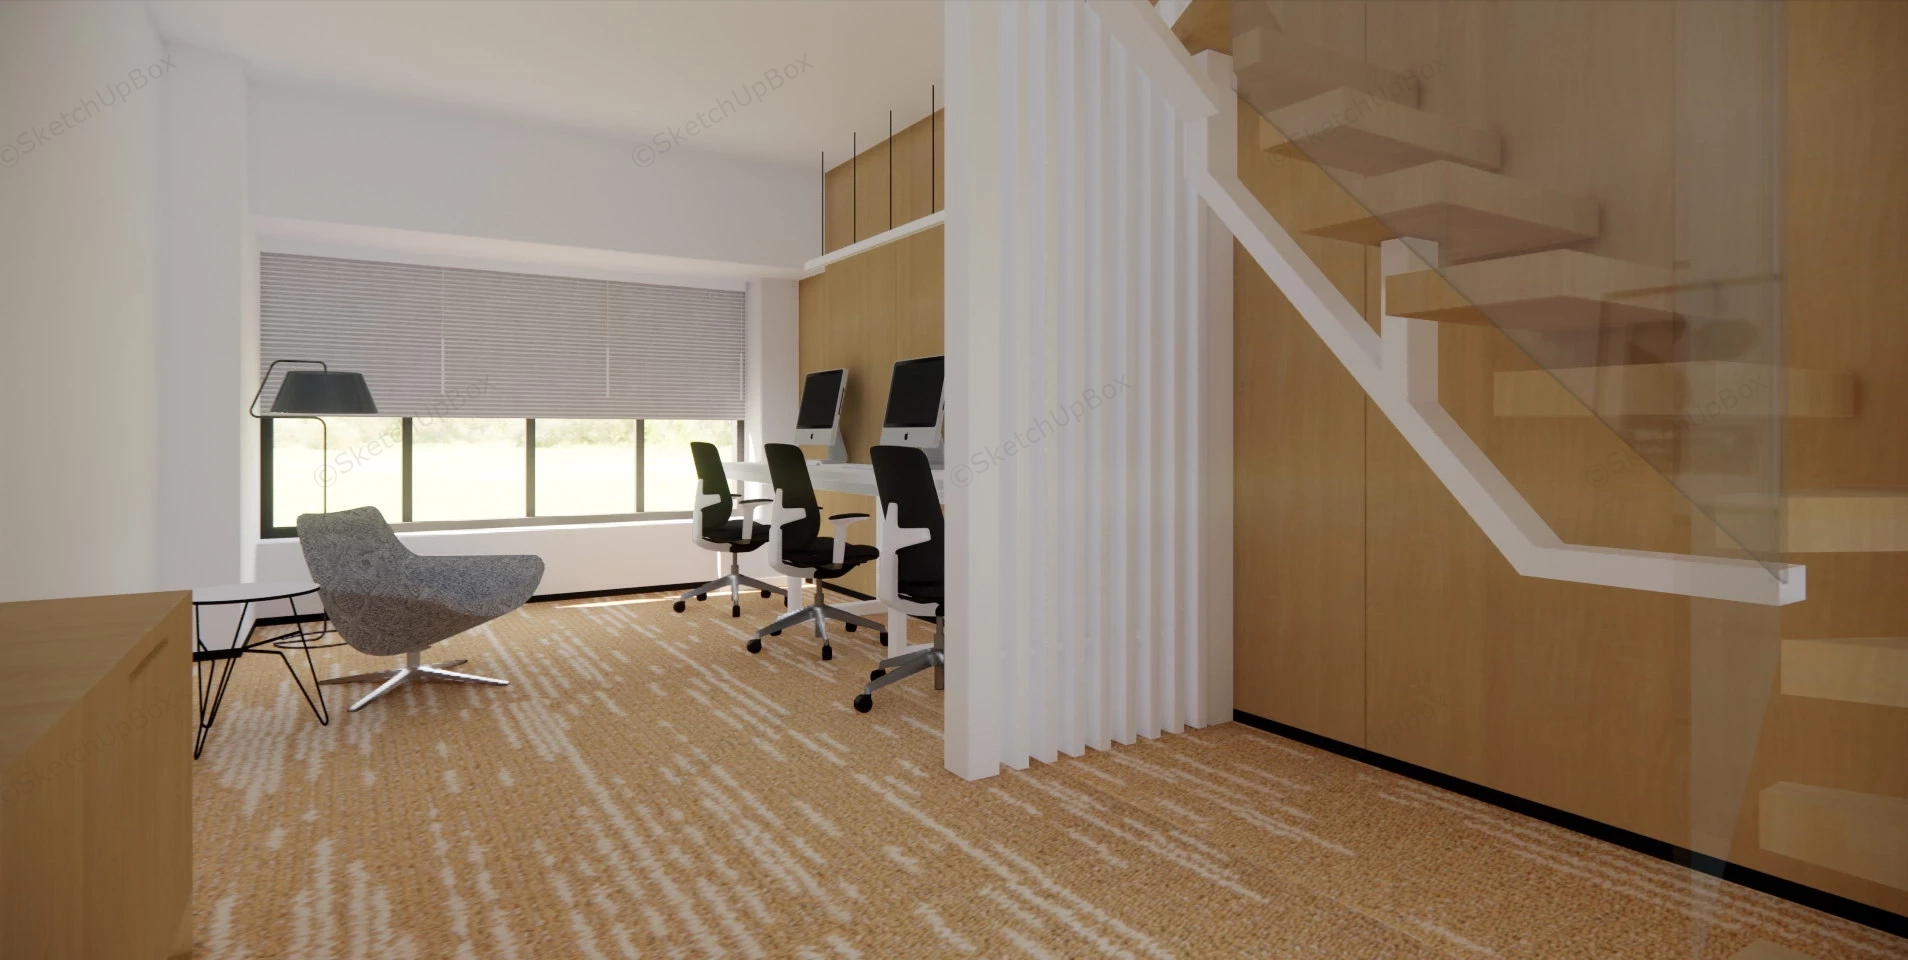 Soho Office Space Interior Design sketchup model preview - SketchupBox